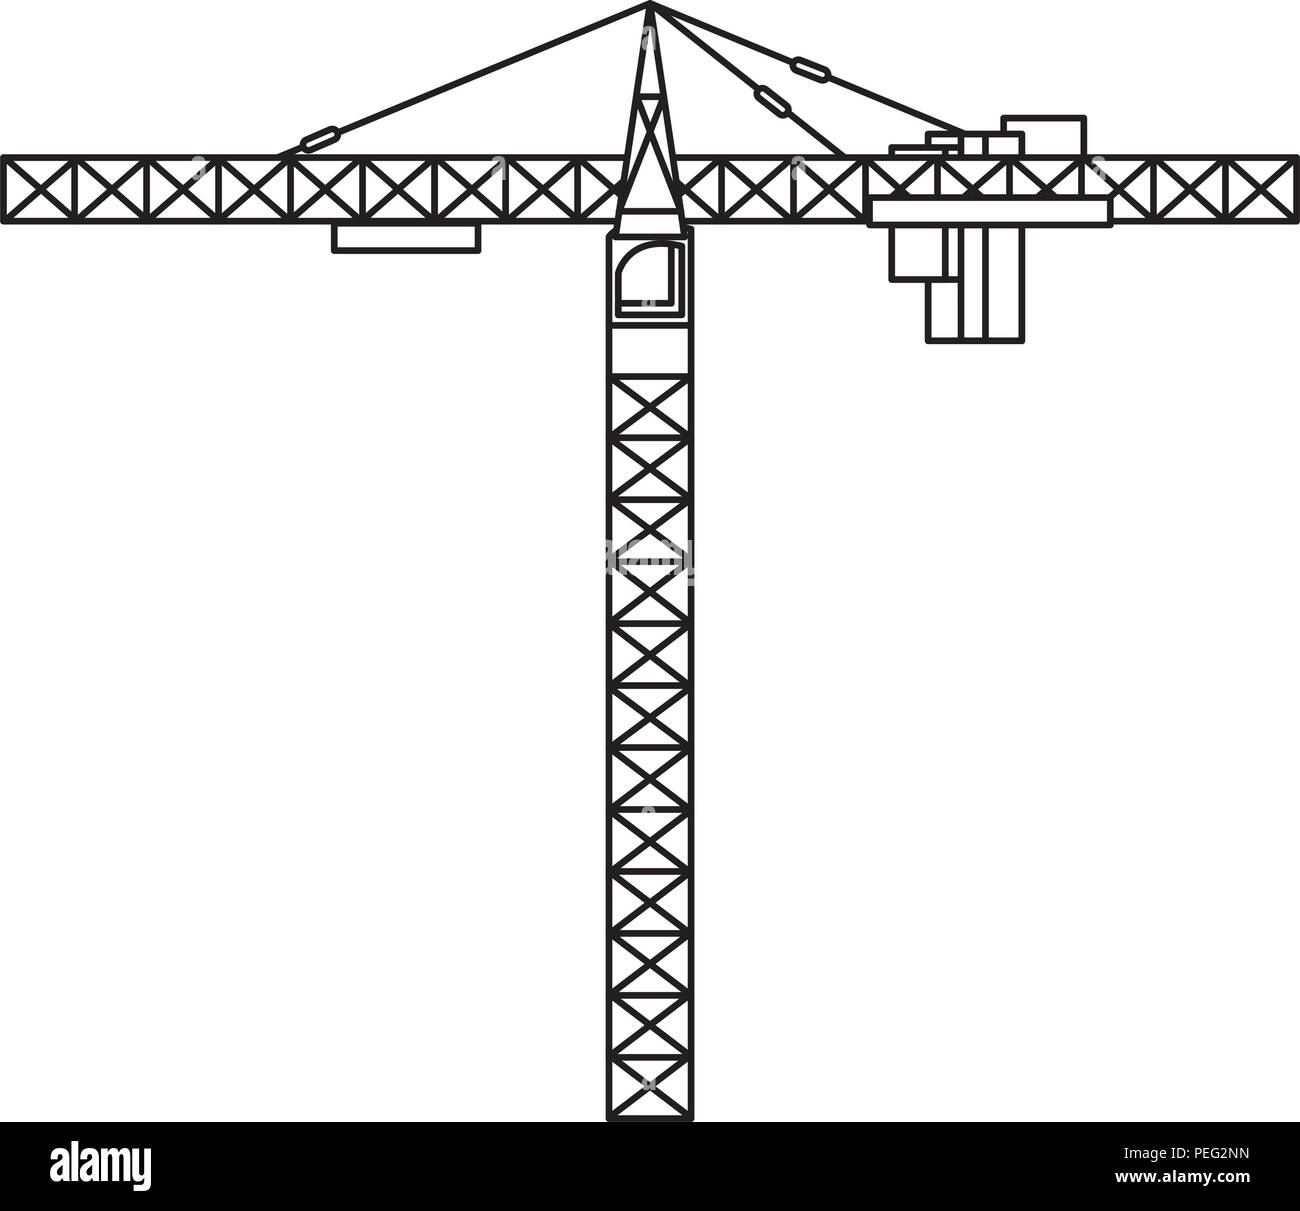 tower crane clipart black